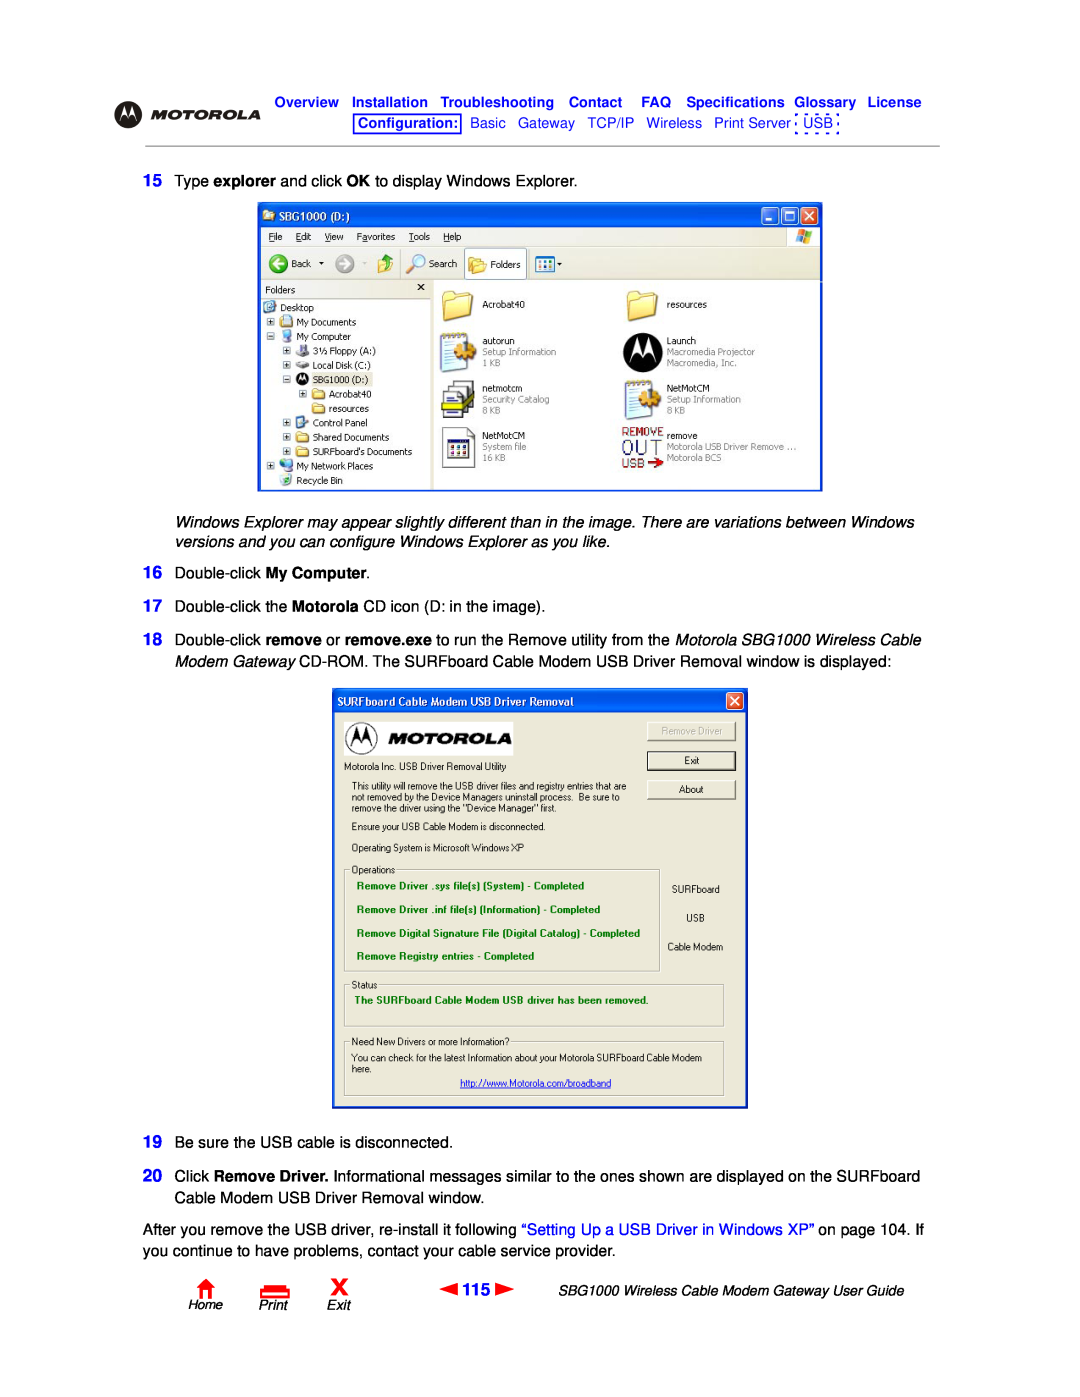 Motorola SBG1000 manual Type explorer and click OK to display Windows Explorer 